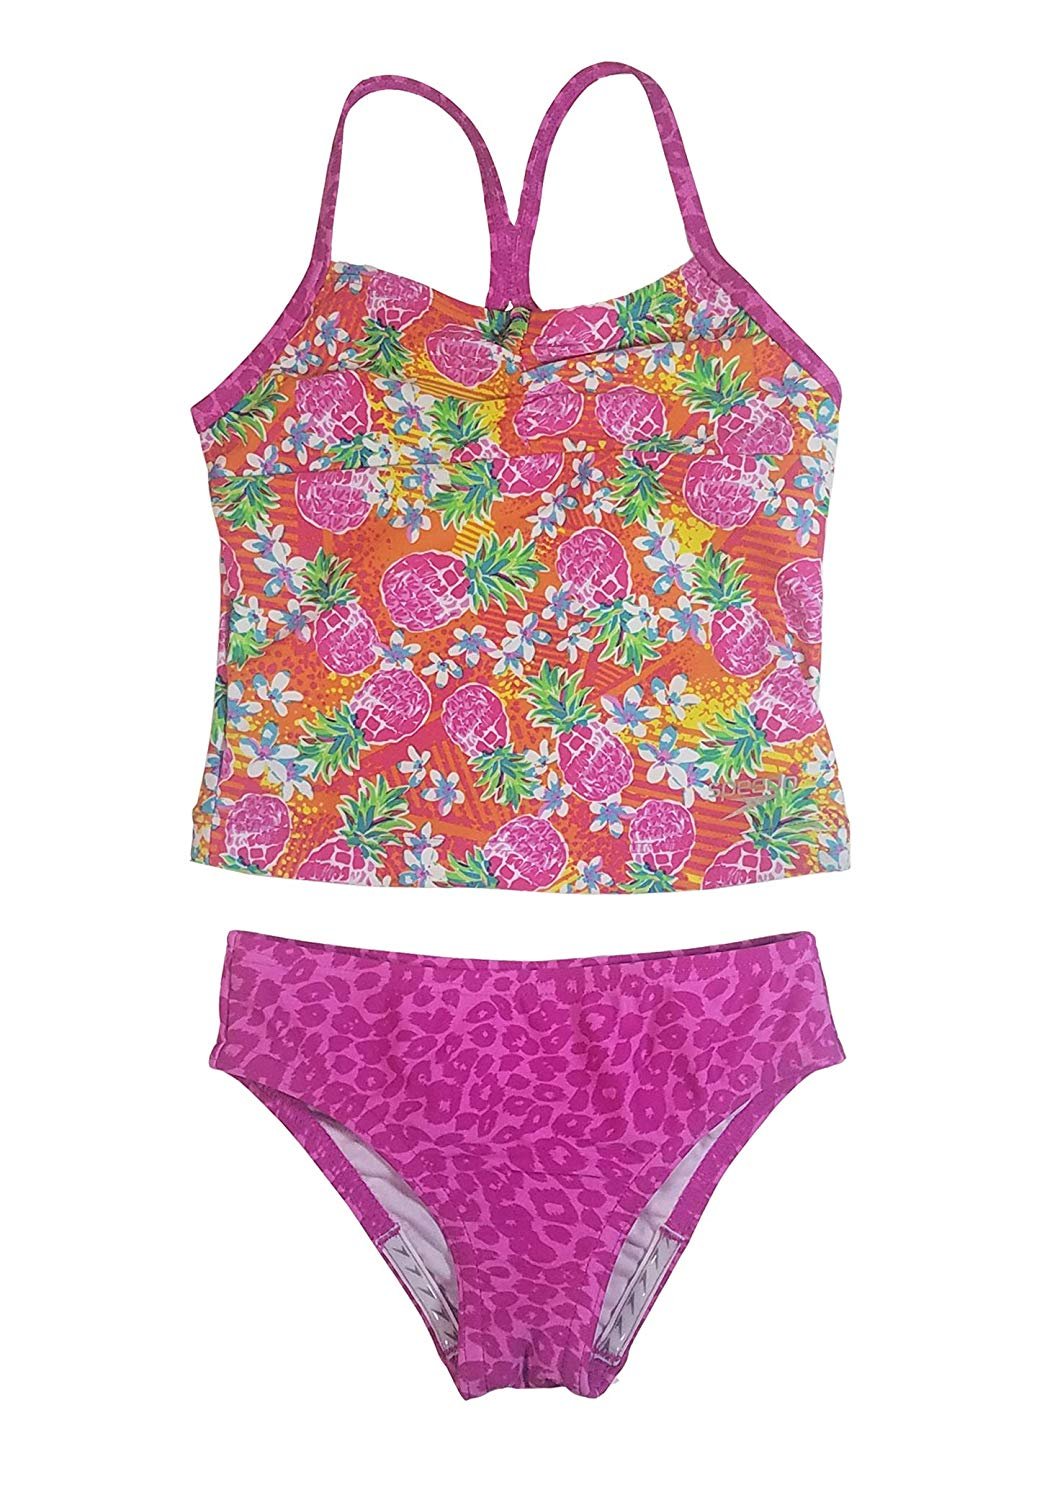 Speedo Girl's Sporty Splice Tankini 2 Piece Swimsuit (16, Pink/Pineapple) - image 1 of 2